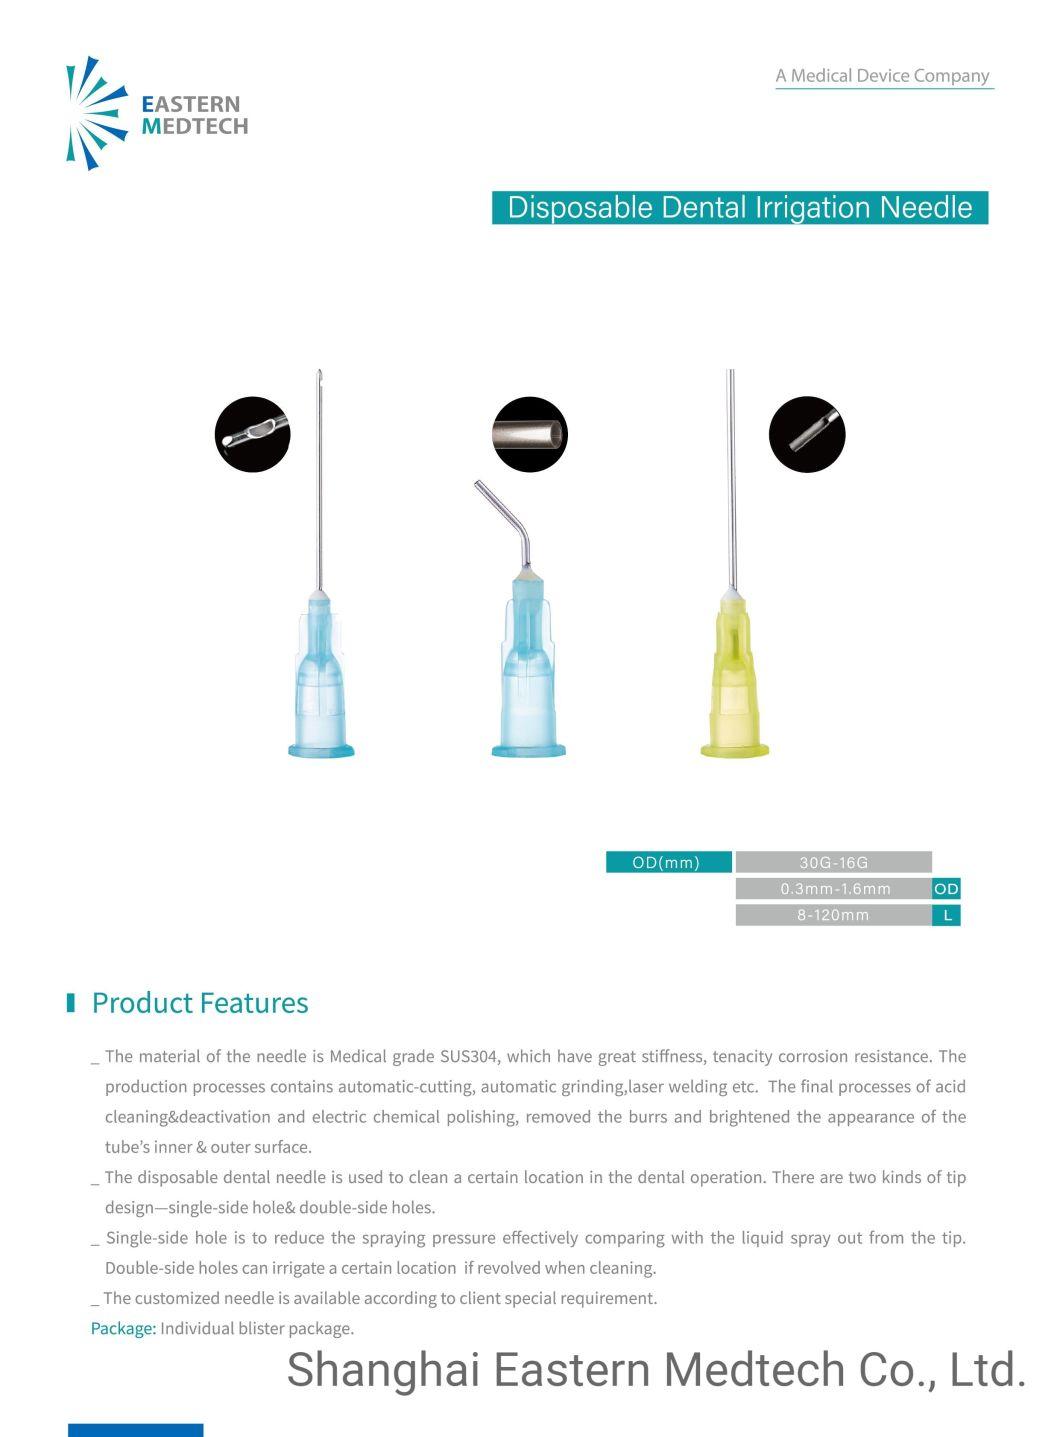 Self Made Cannula International Standard CE ISO Single Use Dental Irrigation Needle Right Angle Type